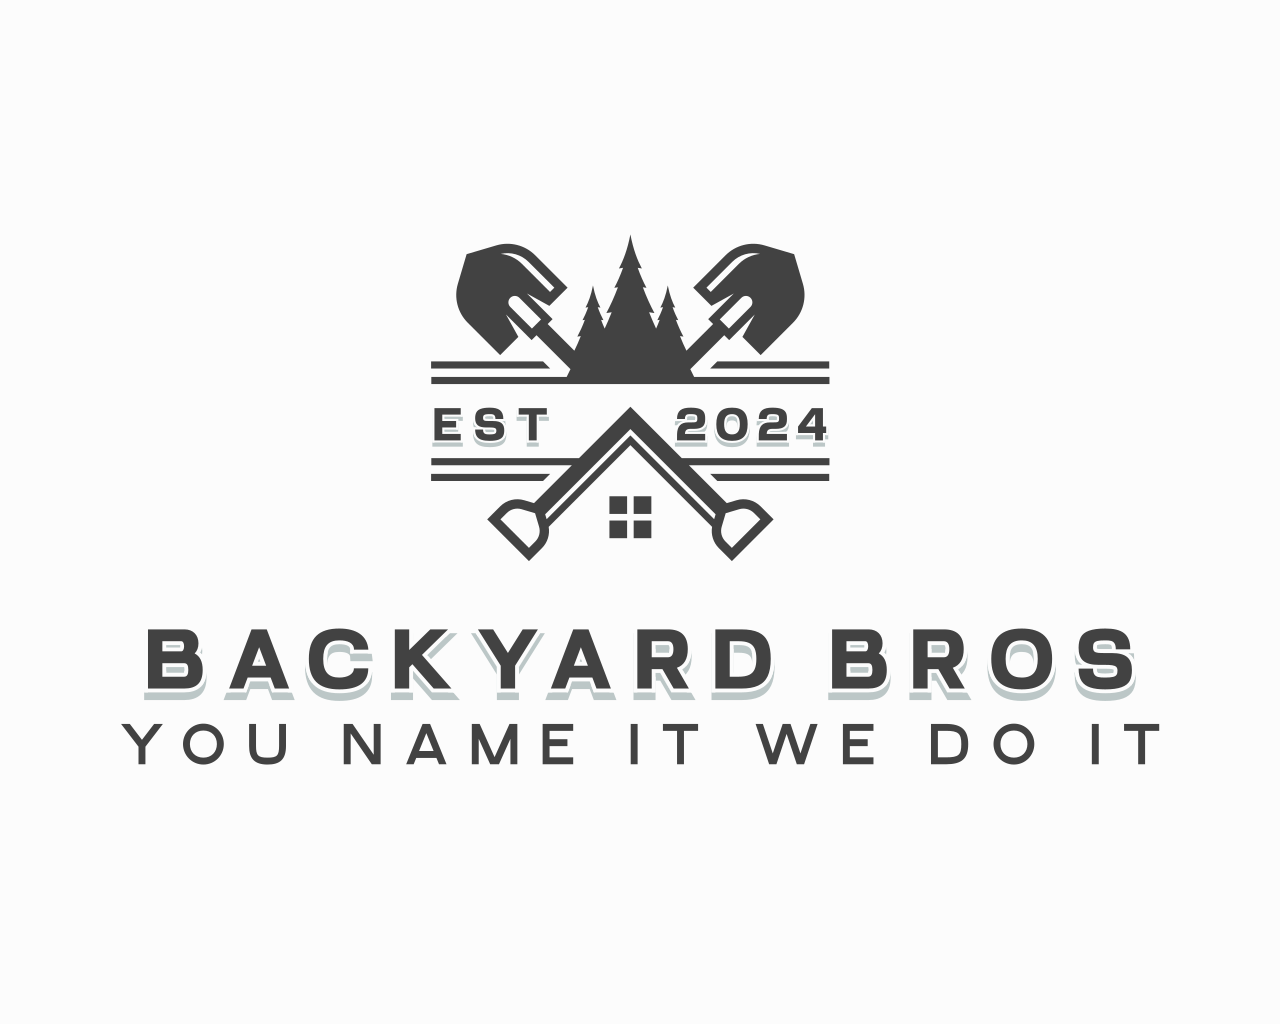 Backyard Bros's logo